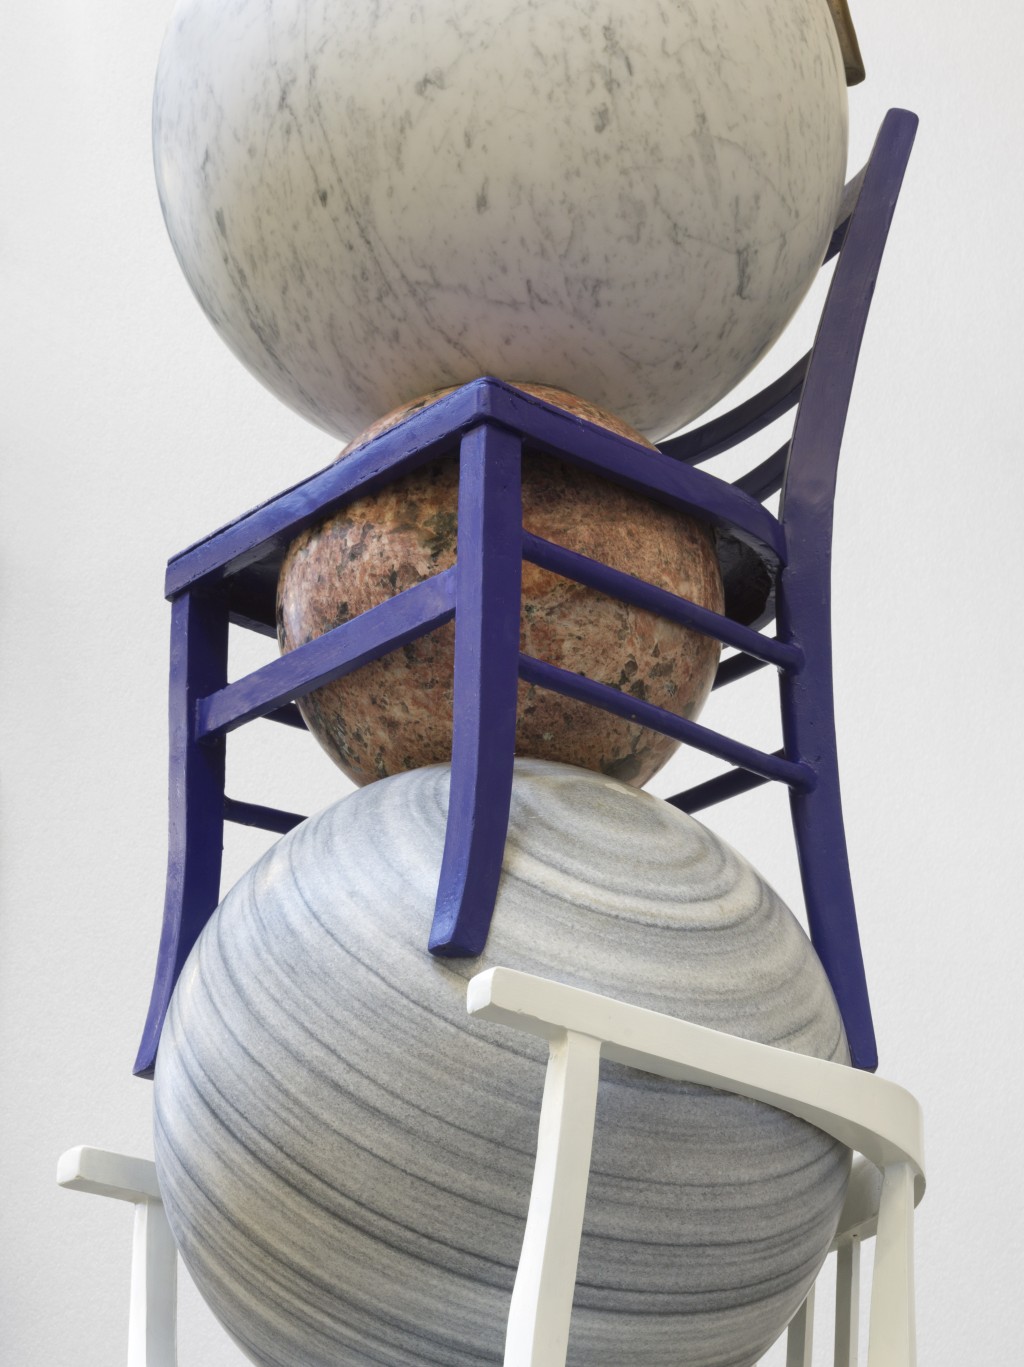 K11 MUSEA海濱長廊展示藝術家Alicja Kwade的雕塑作品《世界的秩序（圖騰）》。（鳴謝藝術家及佩斯畫廊；Roman März攝影）